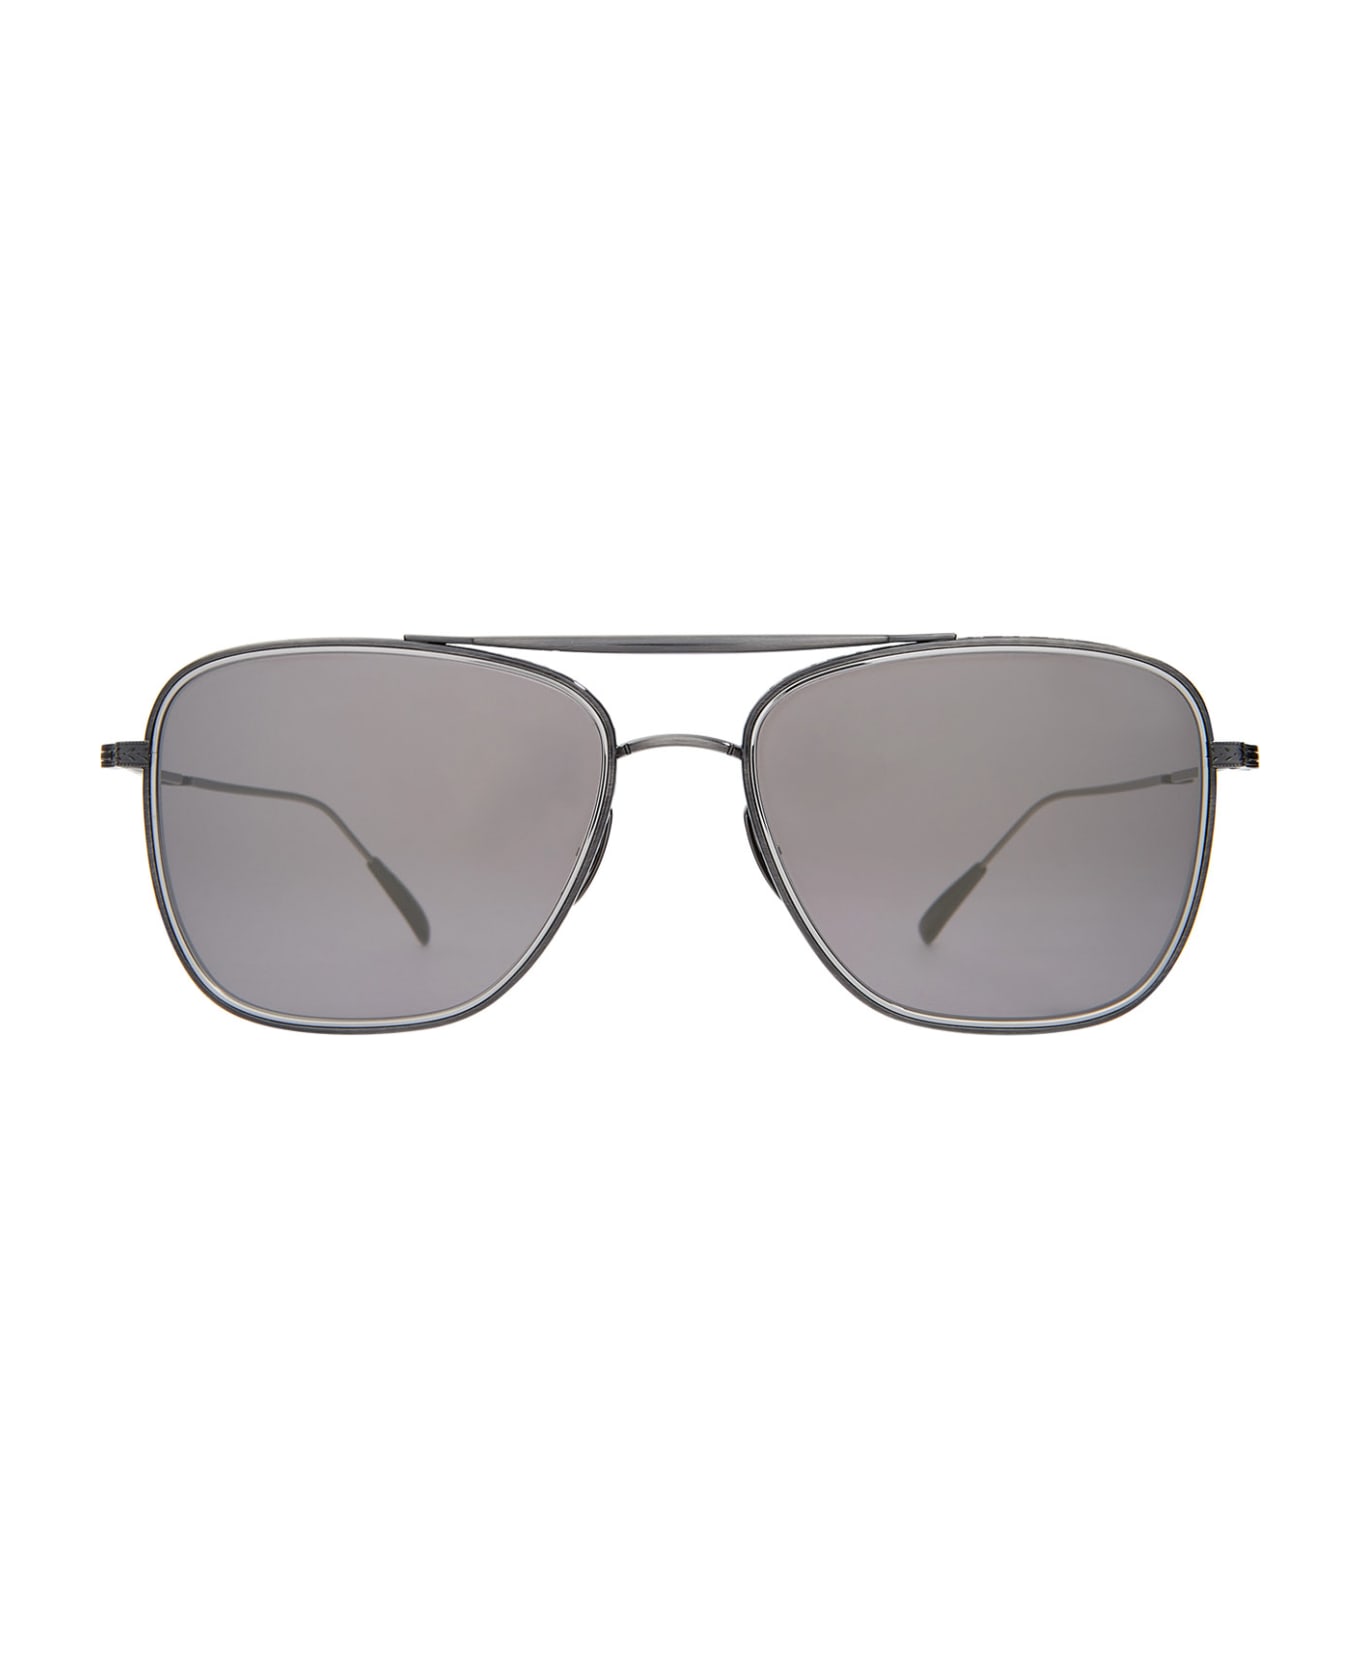 Mr. Leight Novarro S Pewter-black Sunglasses - Pewter-Black